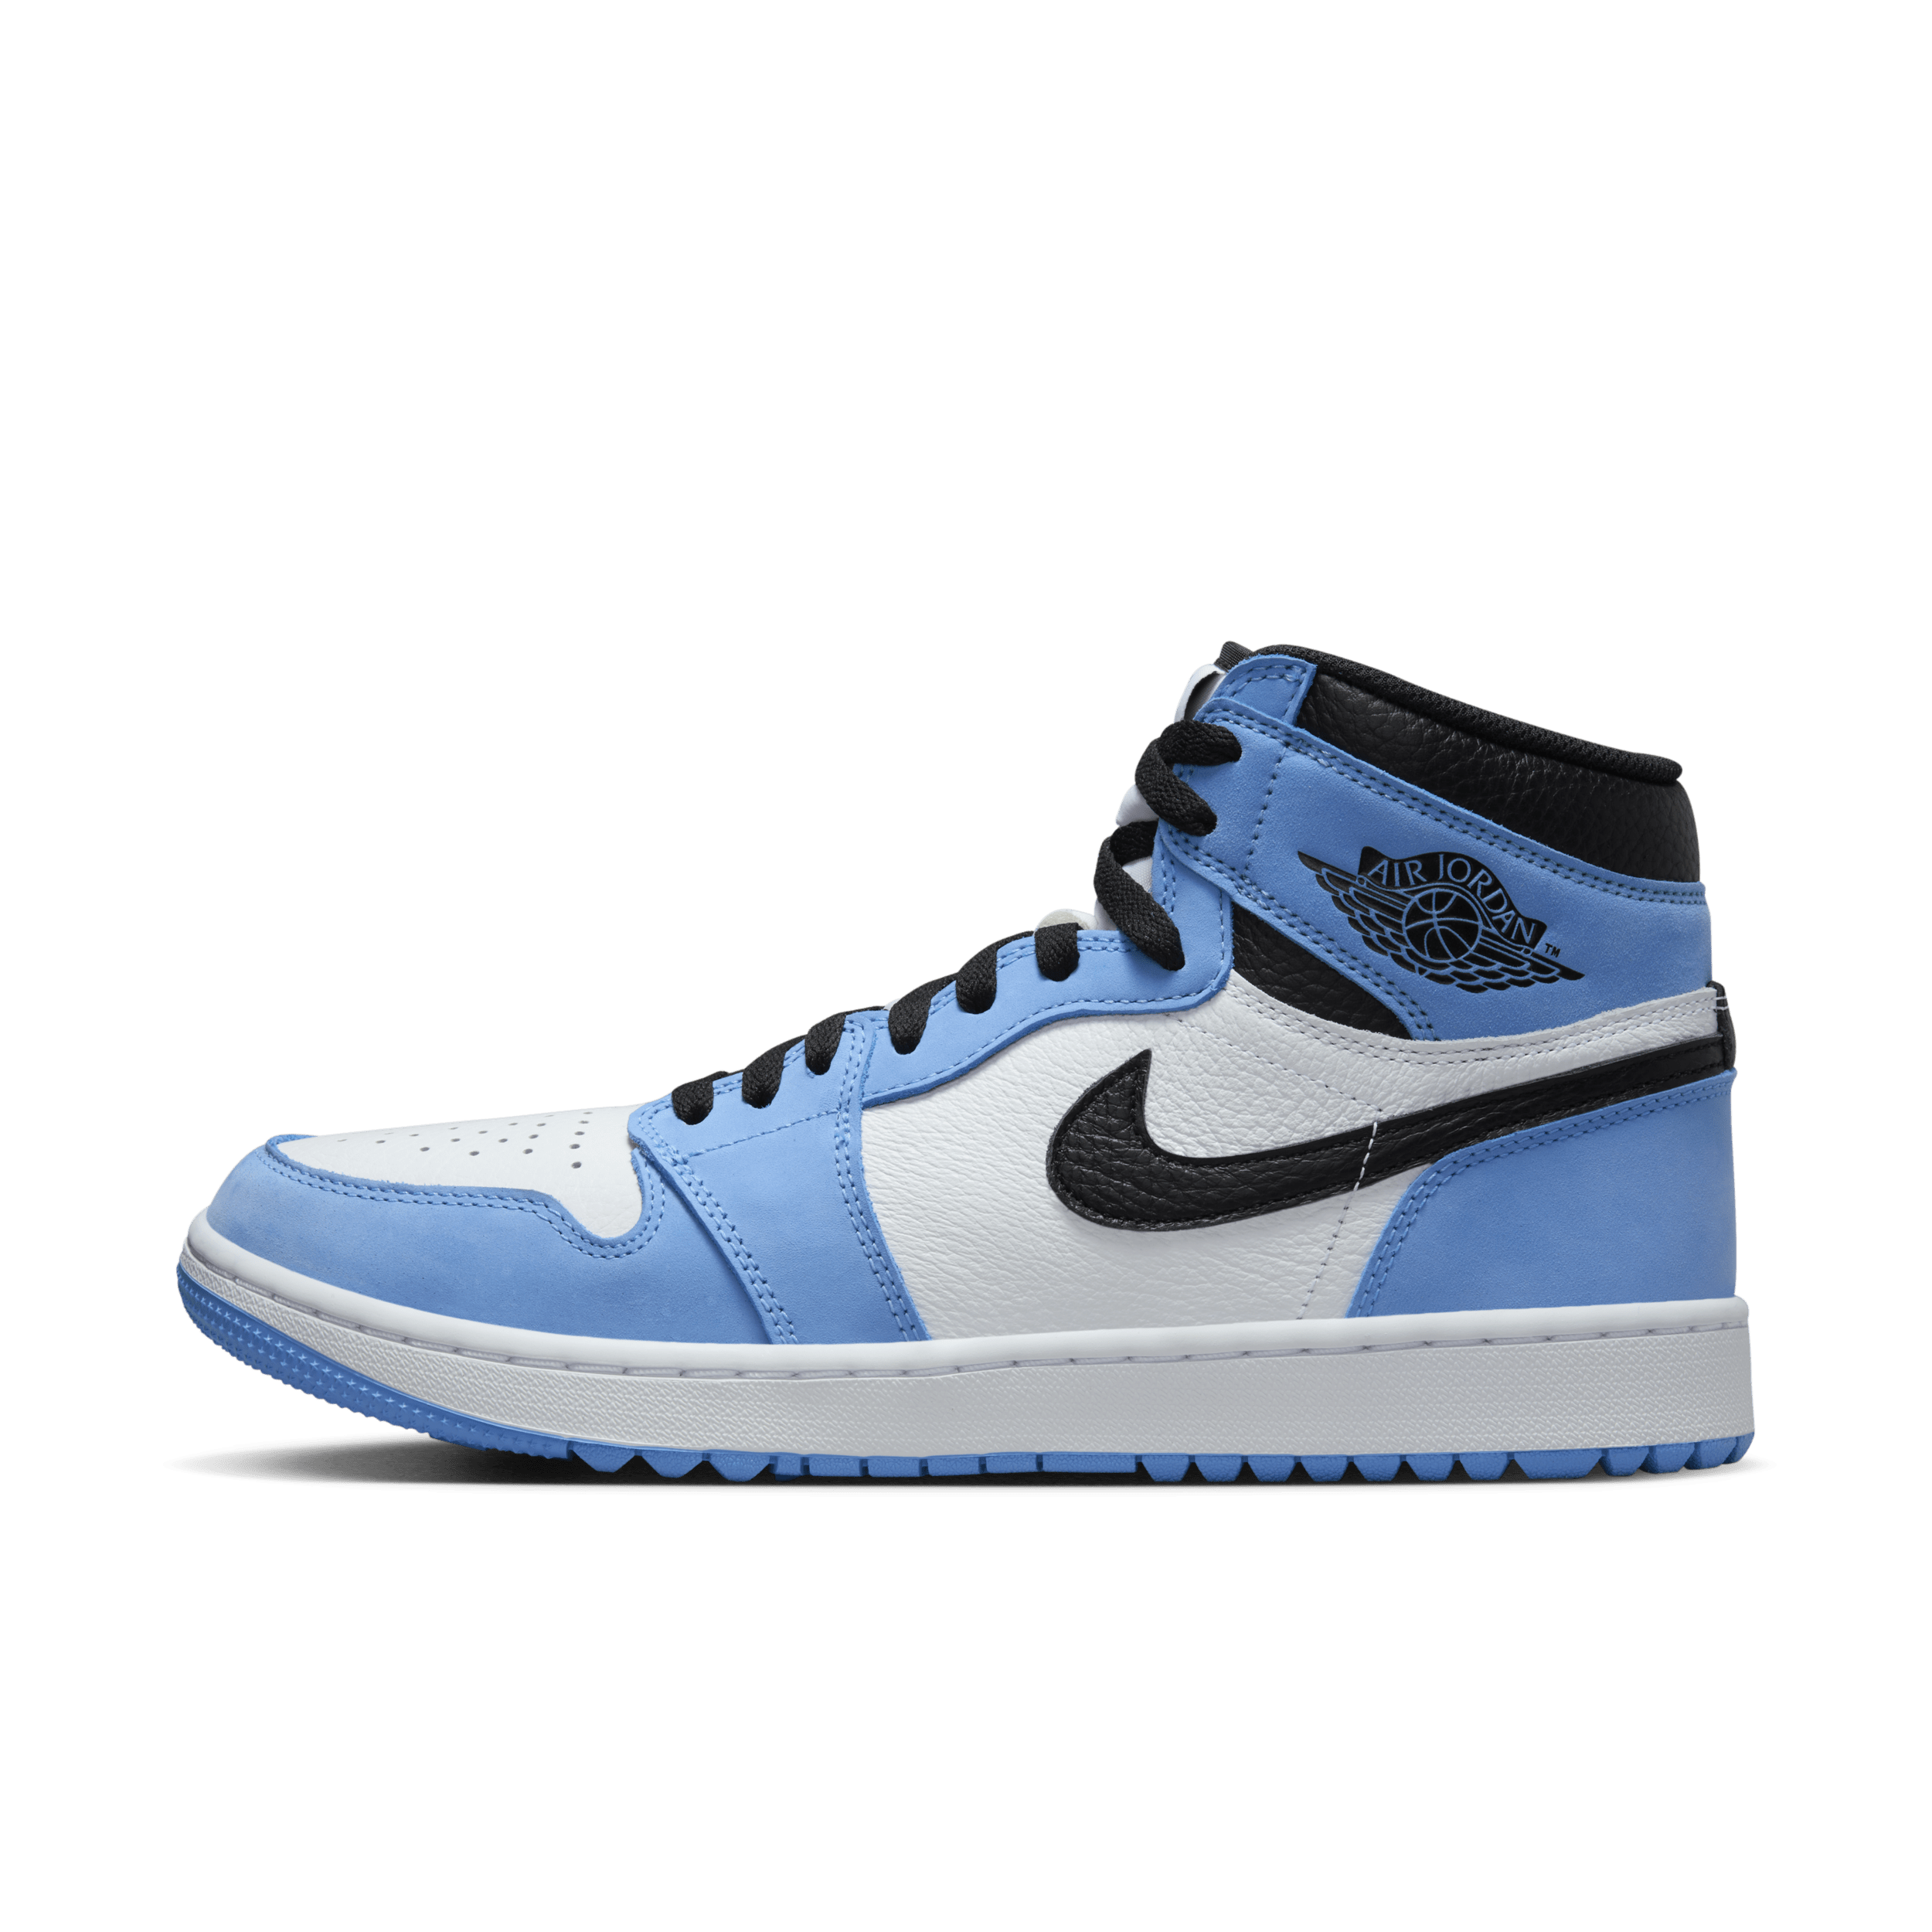 Nike Scarpa da golf Air Jordan I High G – Uomo - Blu